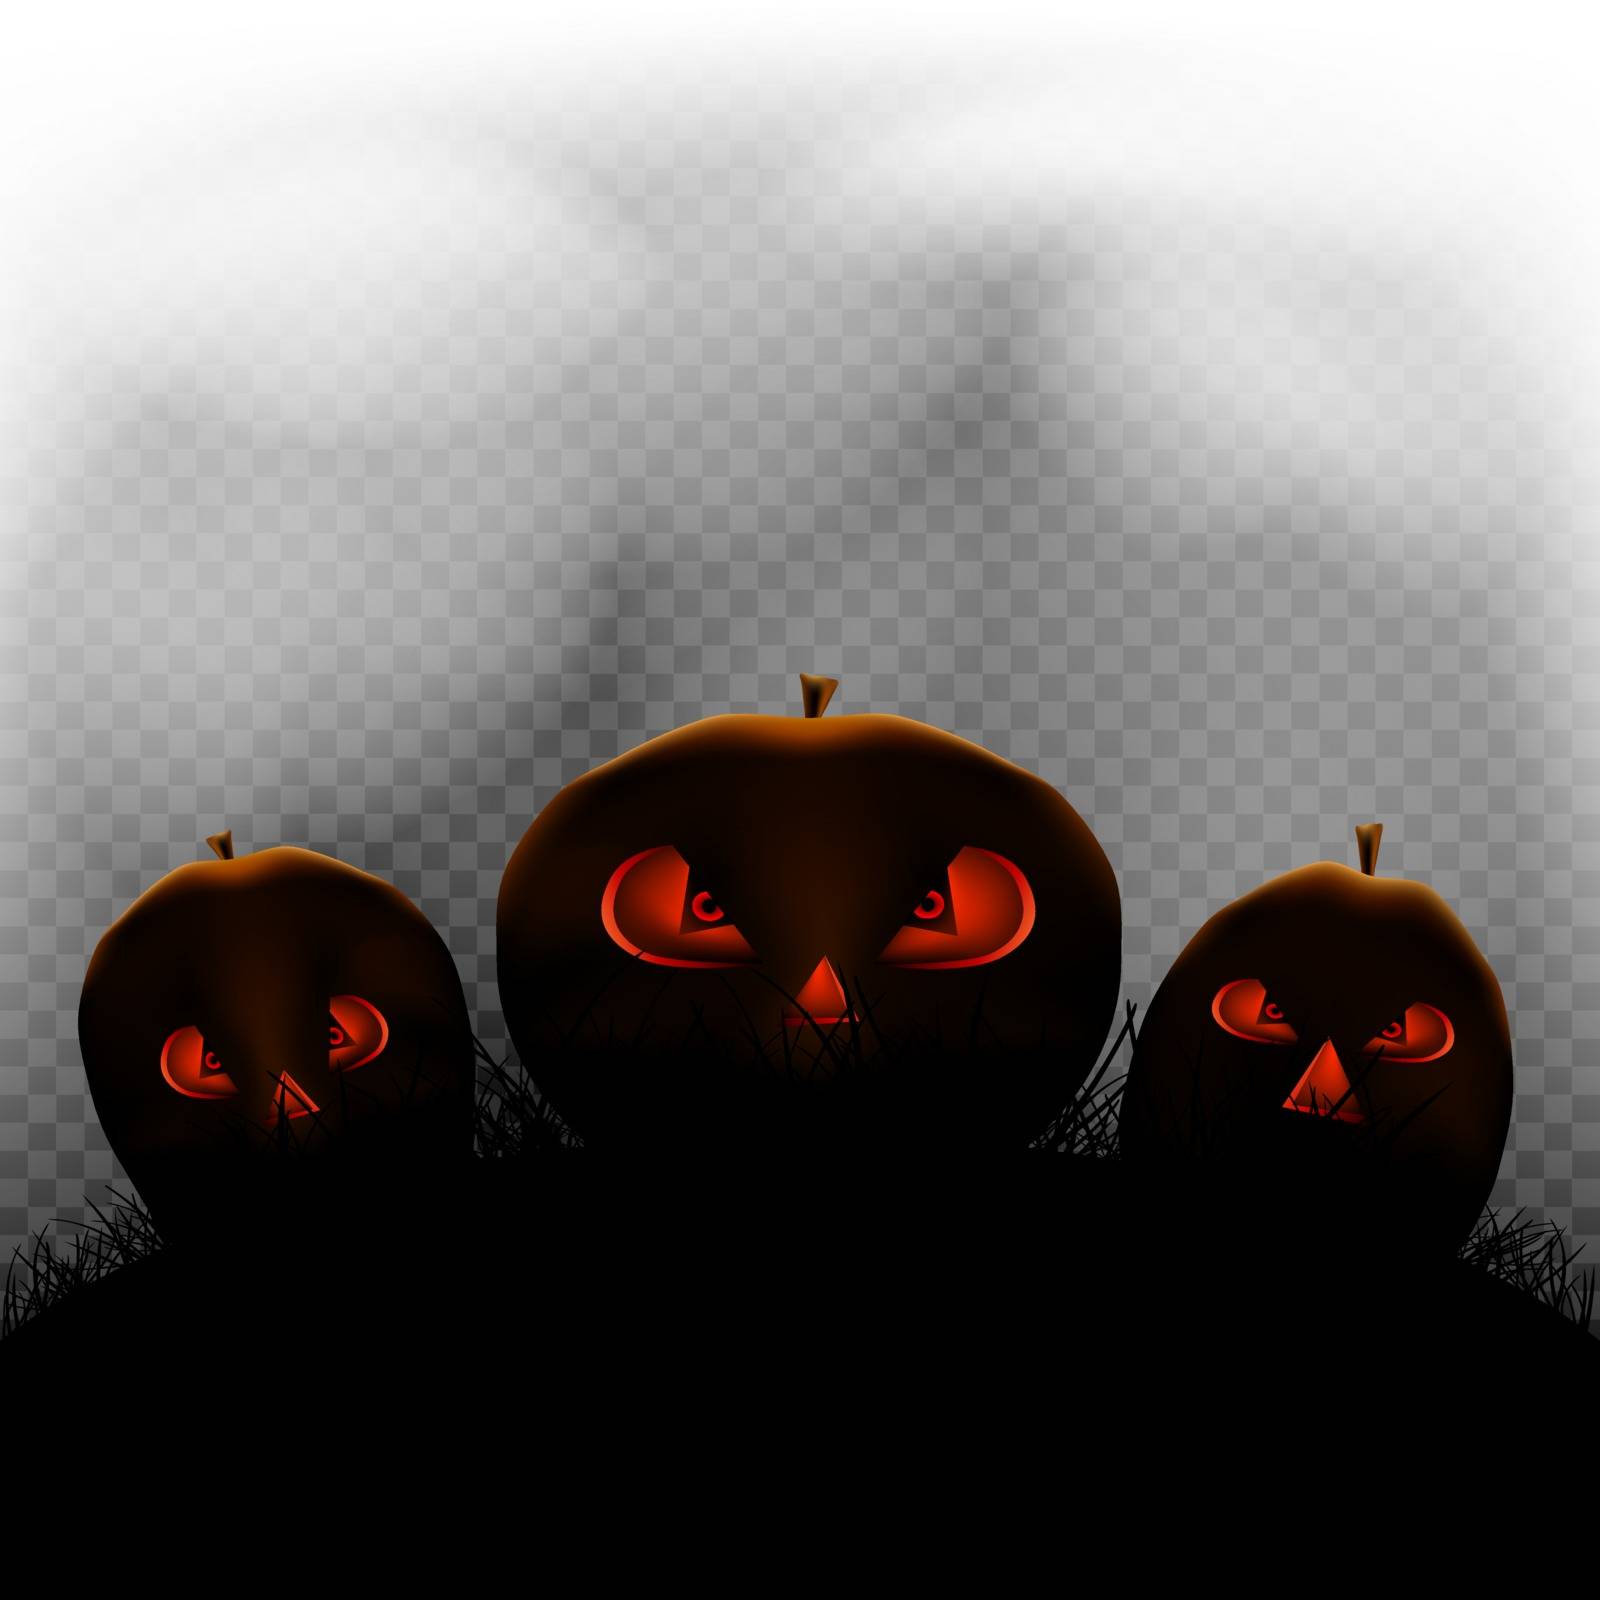 Halloween scary pumpkins set in transparent dark and moonlight fog. Cartoon pumpkin plant silhouette with teeth eye and nose burns inside